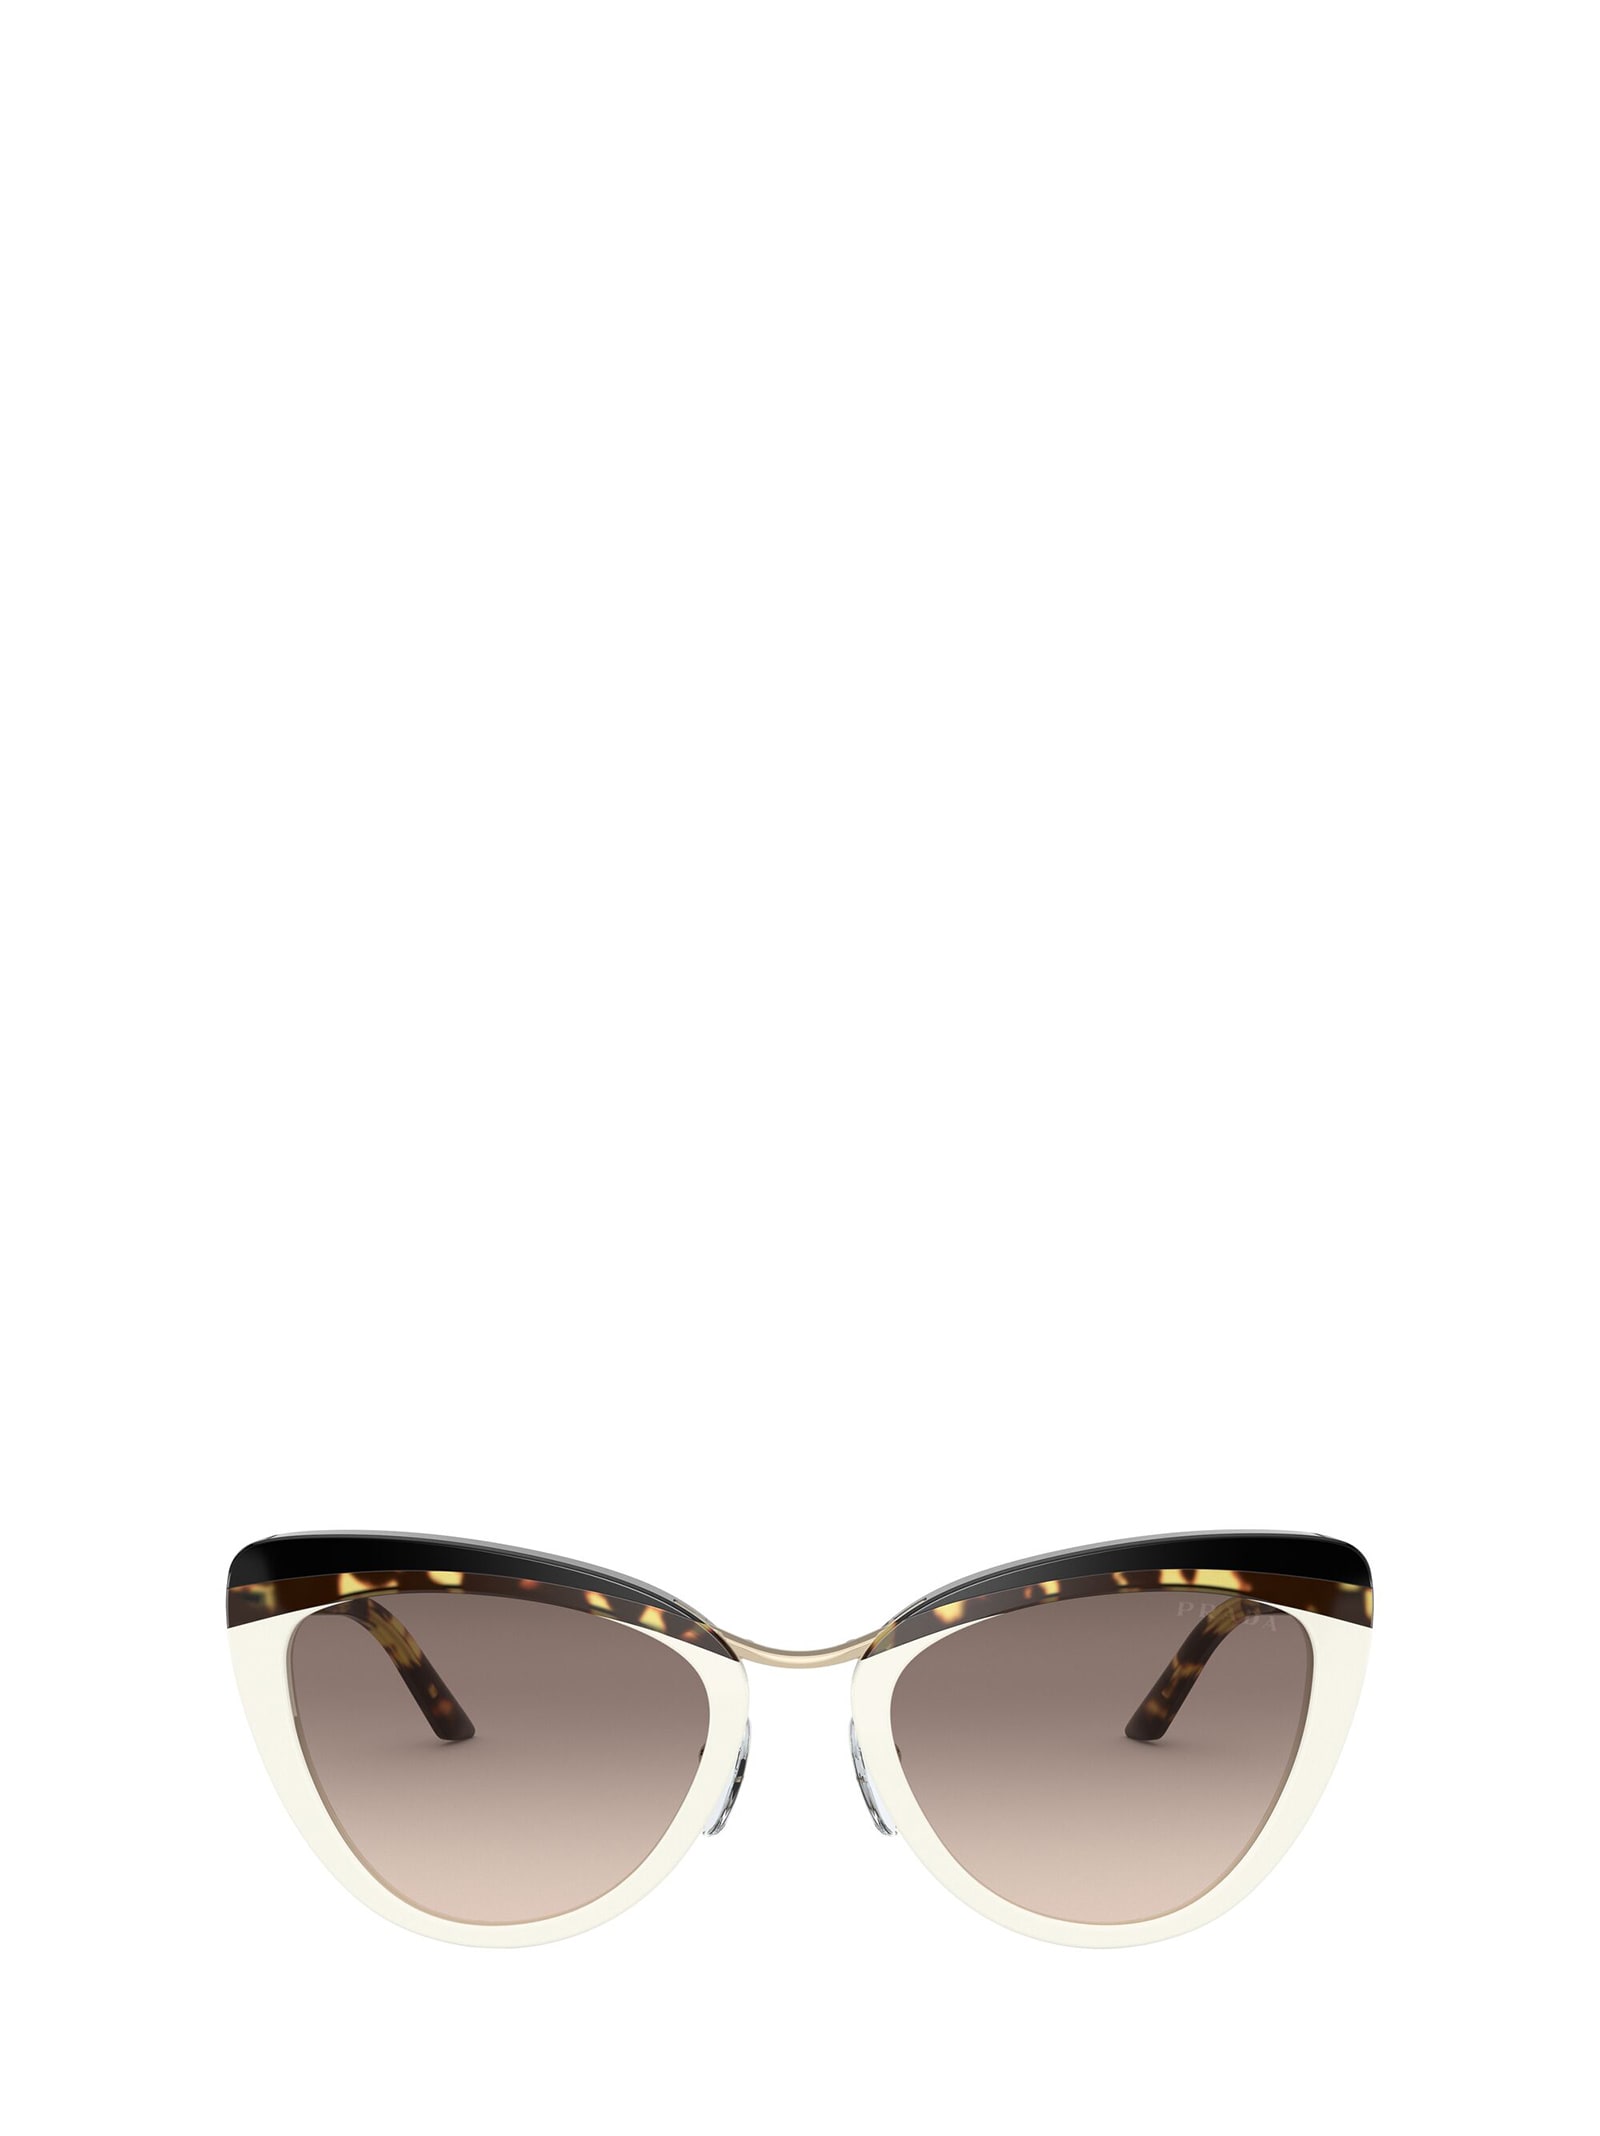 Prada Eyewear Prada Pr 25xs Havana & Ivory Sunglasses